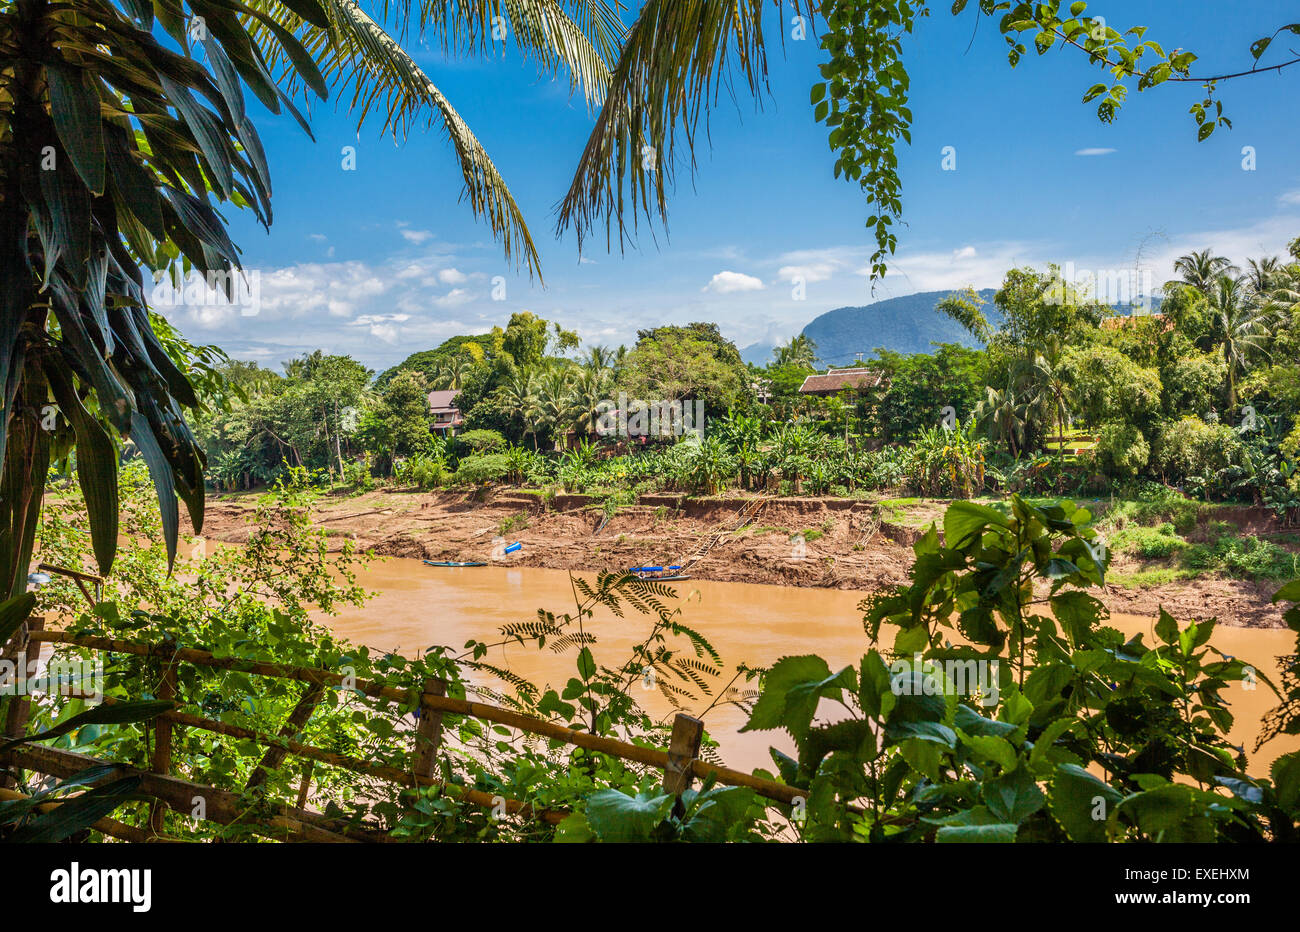 Lao People's Democratic Republic, Laos, Luang Prabang, view of Nam Khan River flowing through lush tropical vegetation Stock Photo